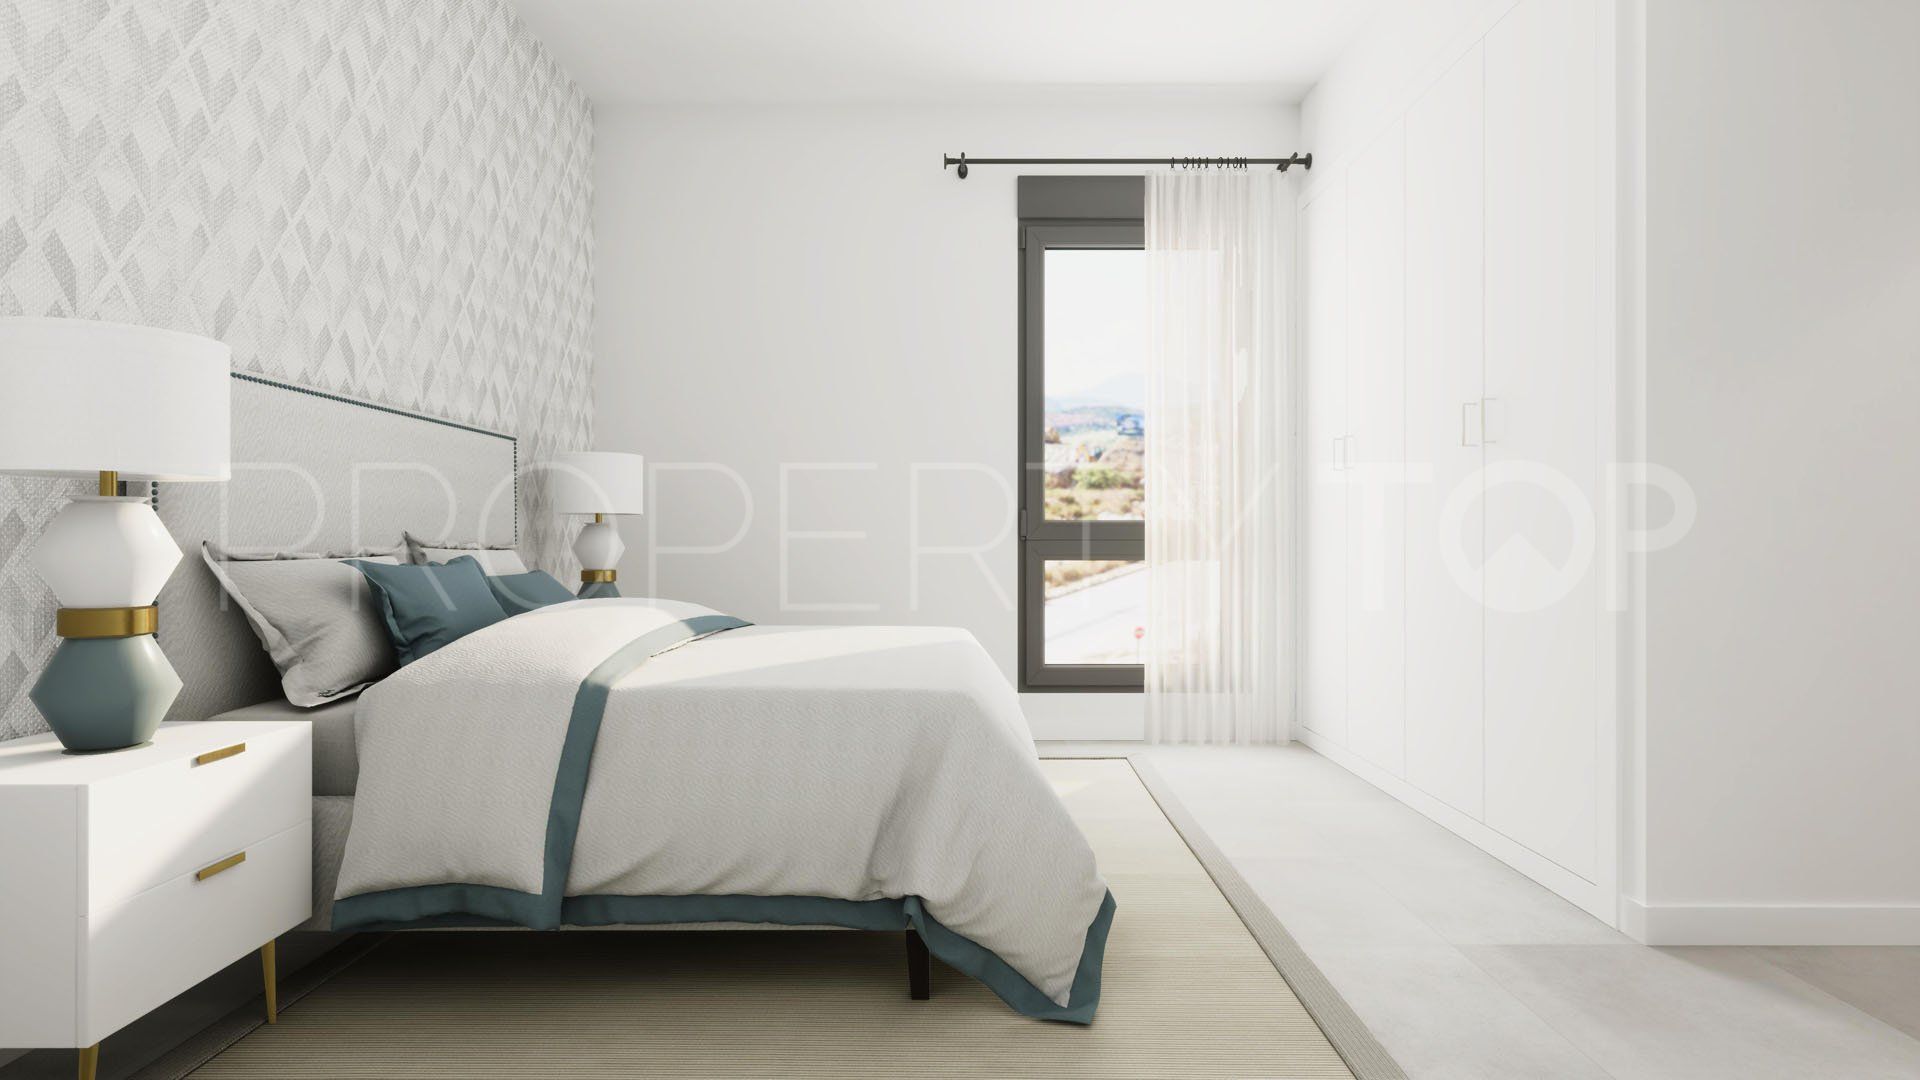 Buy Guadalobon ground floor apartment with 2 bedrooms